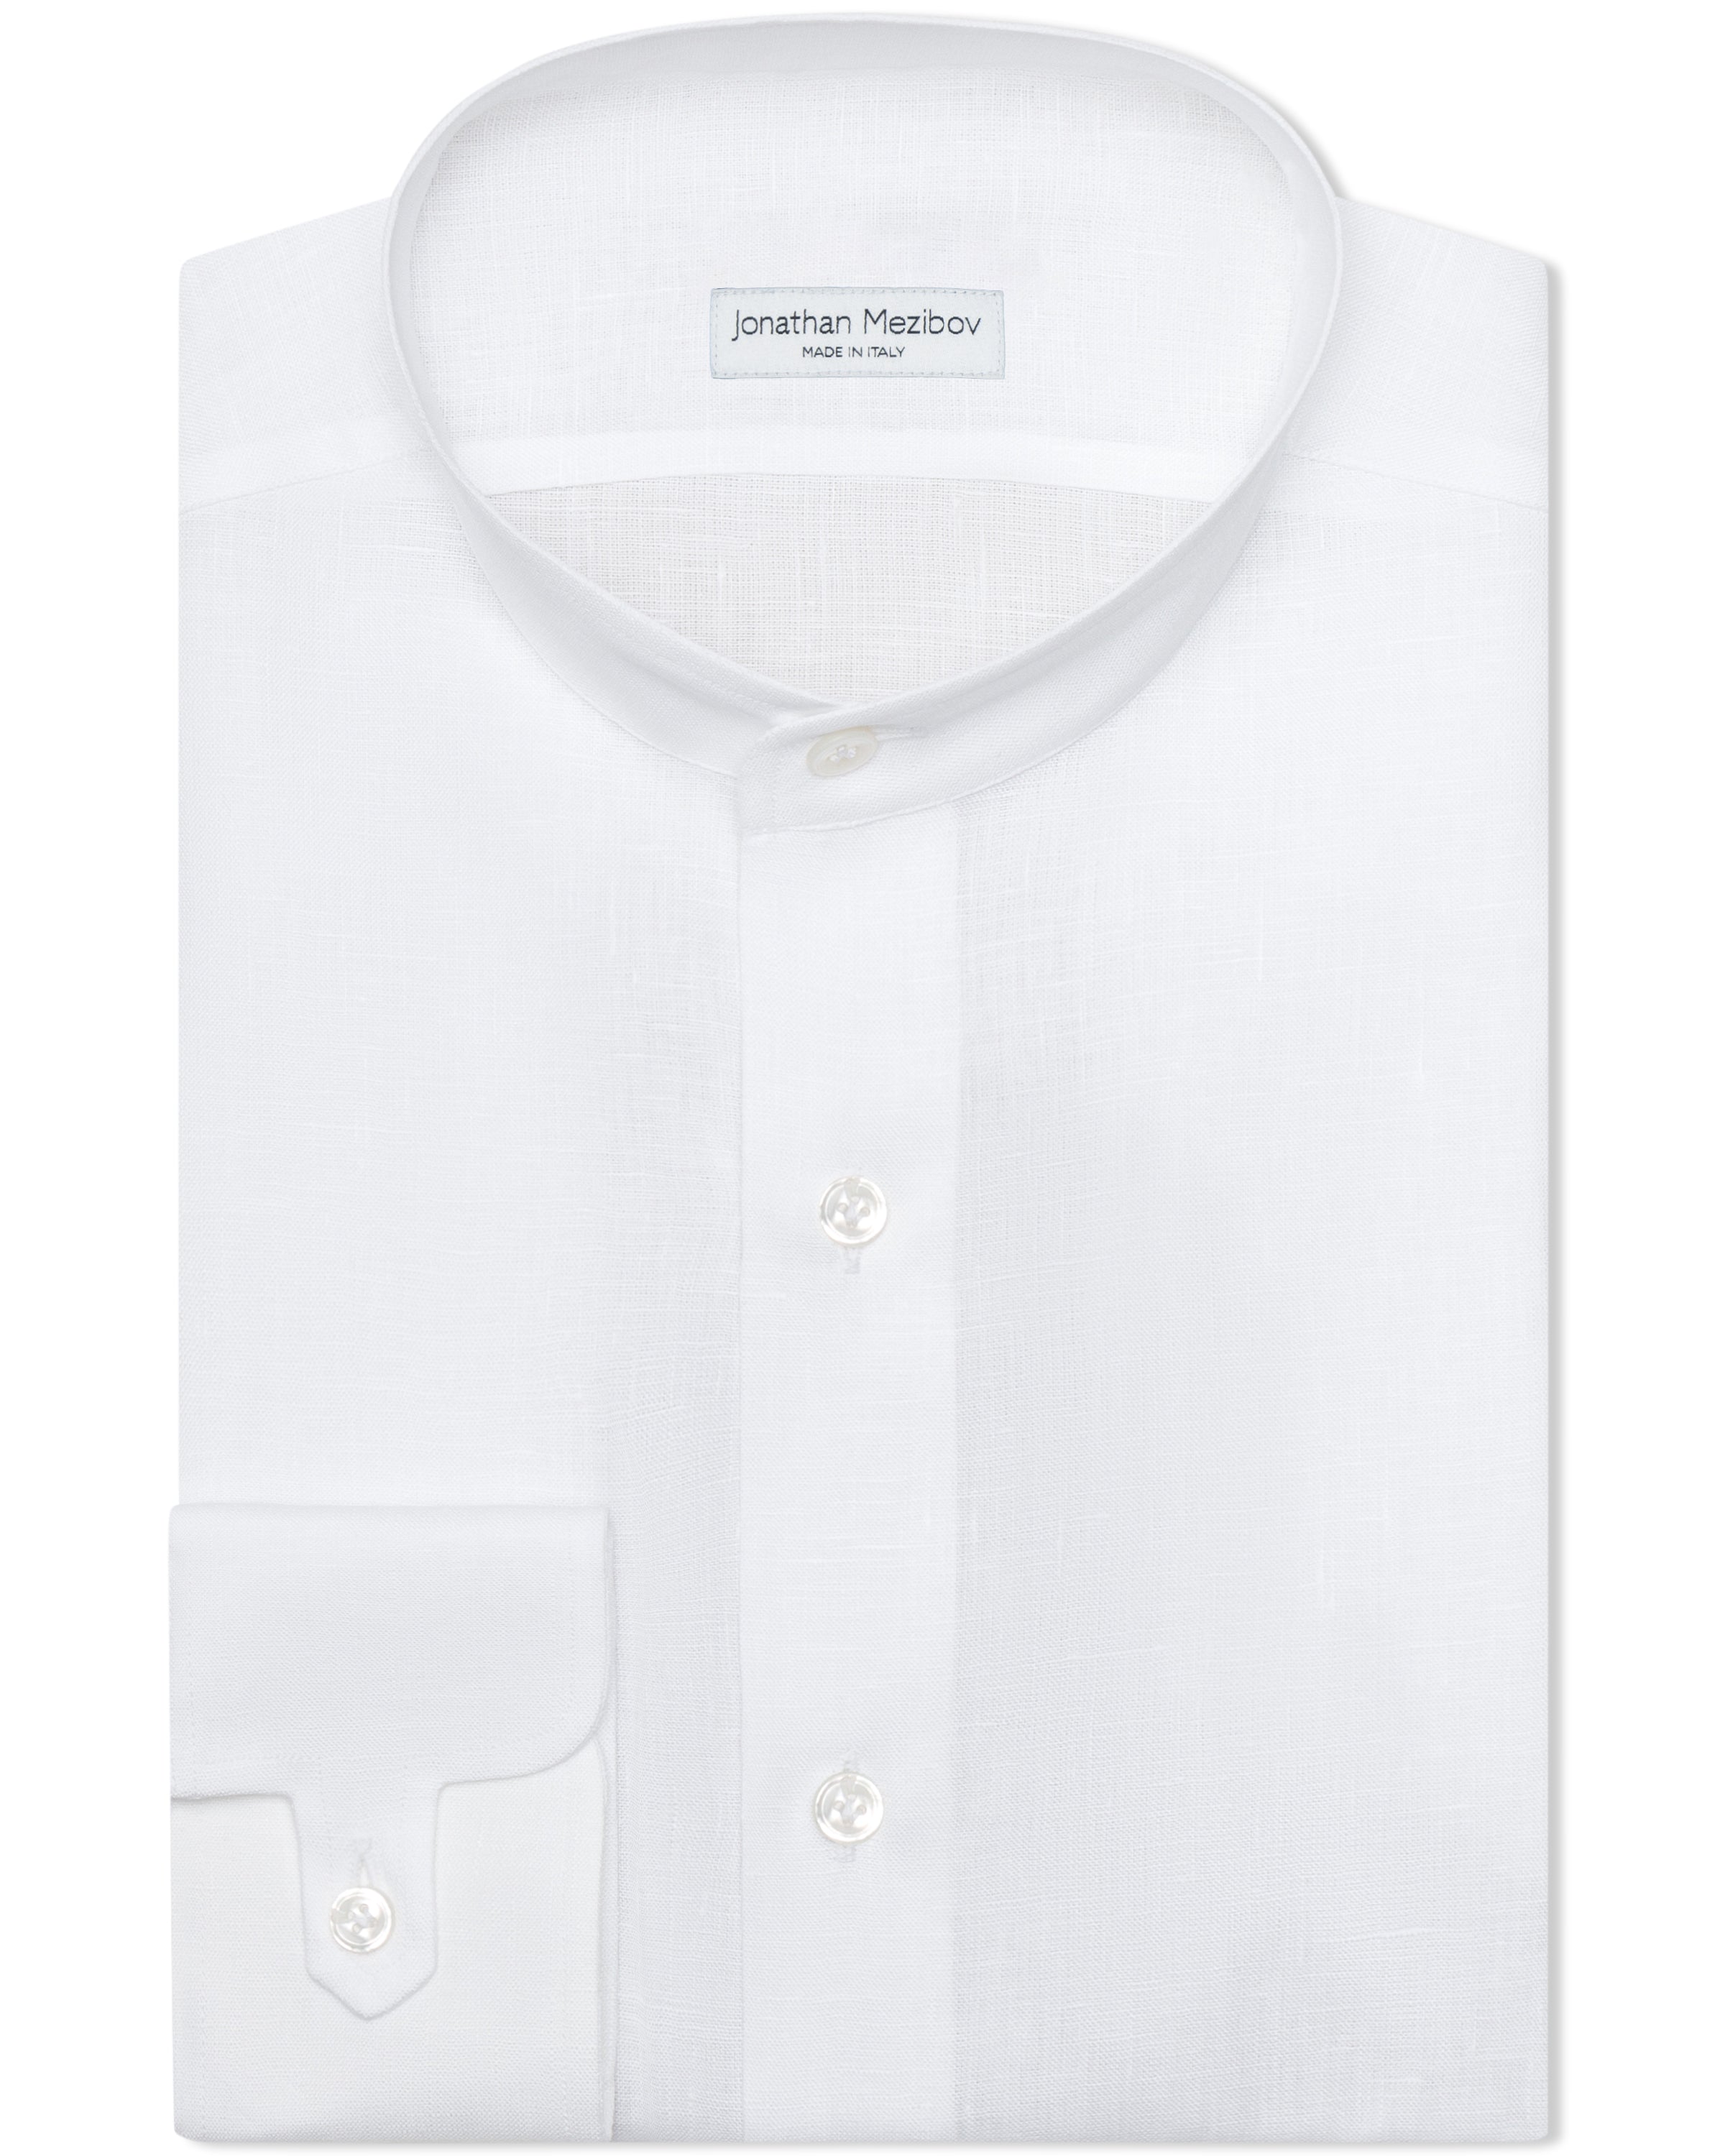 Band Collar Linen Shirt - Preorder